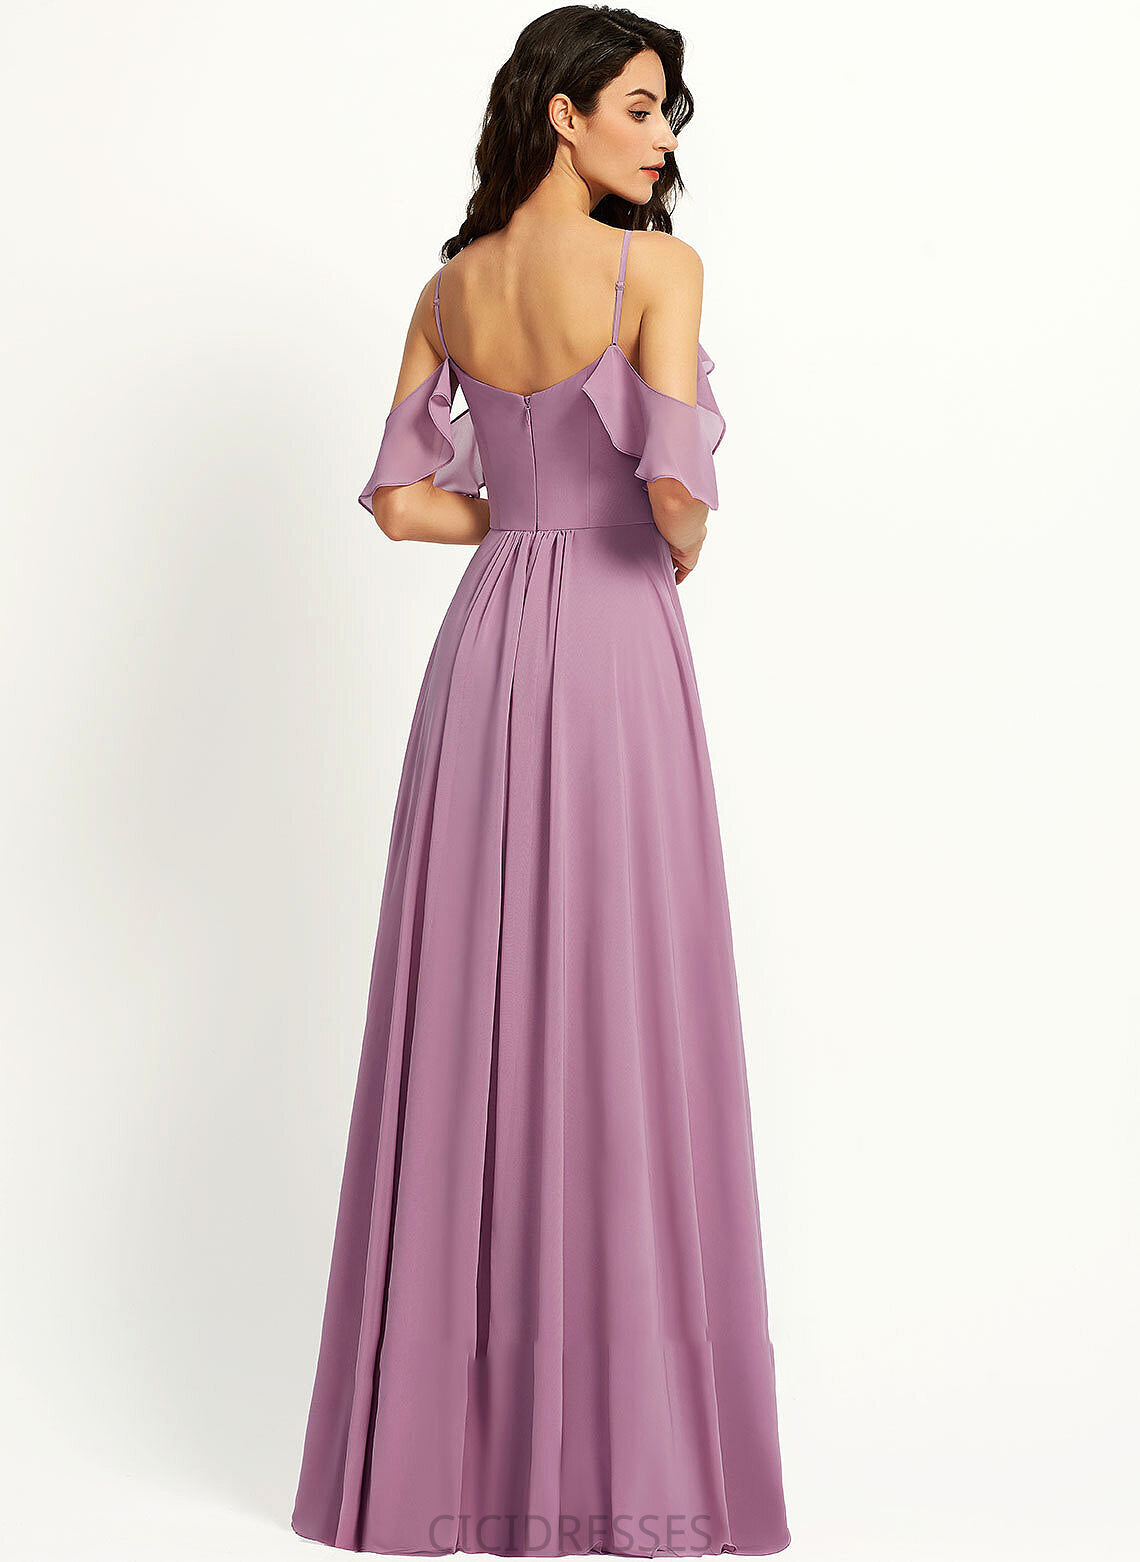 Silhouette Length A-Line Fabric Embellishment Pockets Floor-Length ScoopNeck Neckline Minnie Natural Waist Floor Length Bridesmaid Dresses